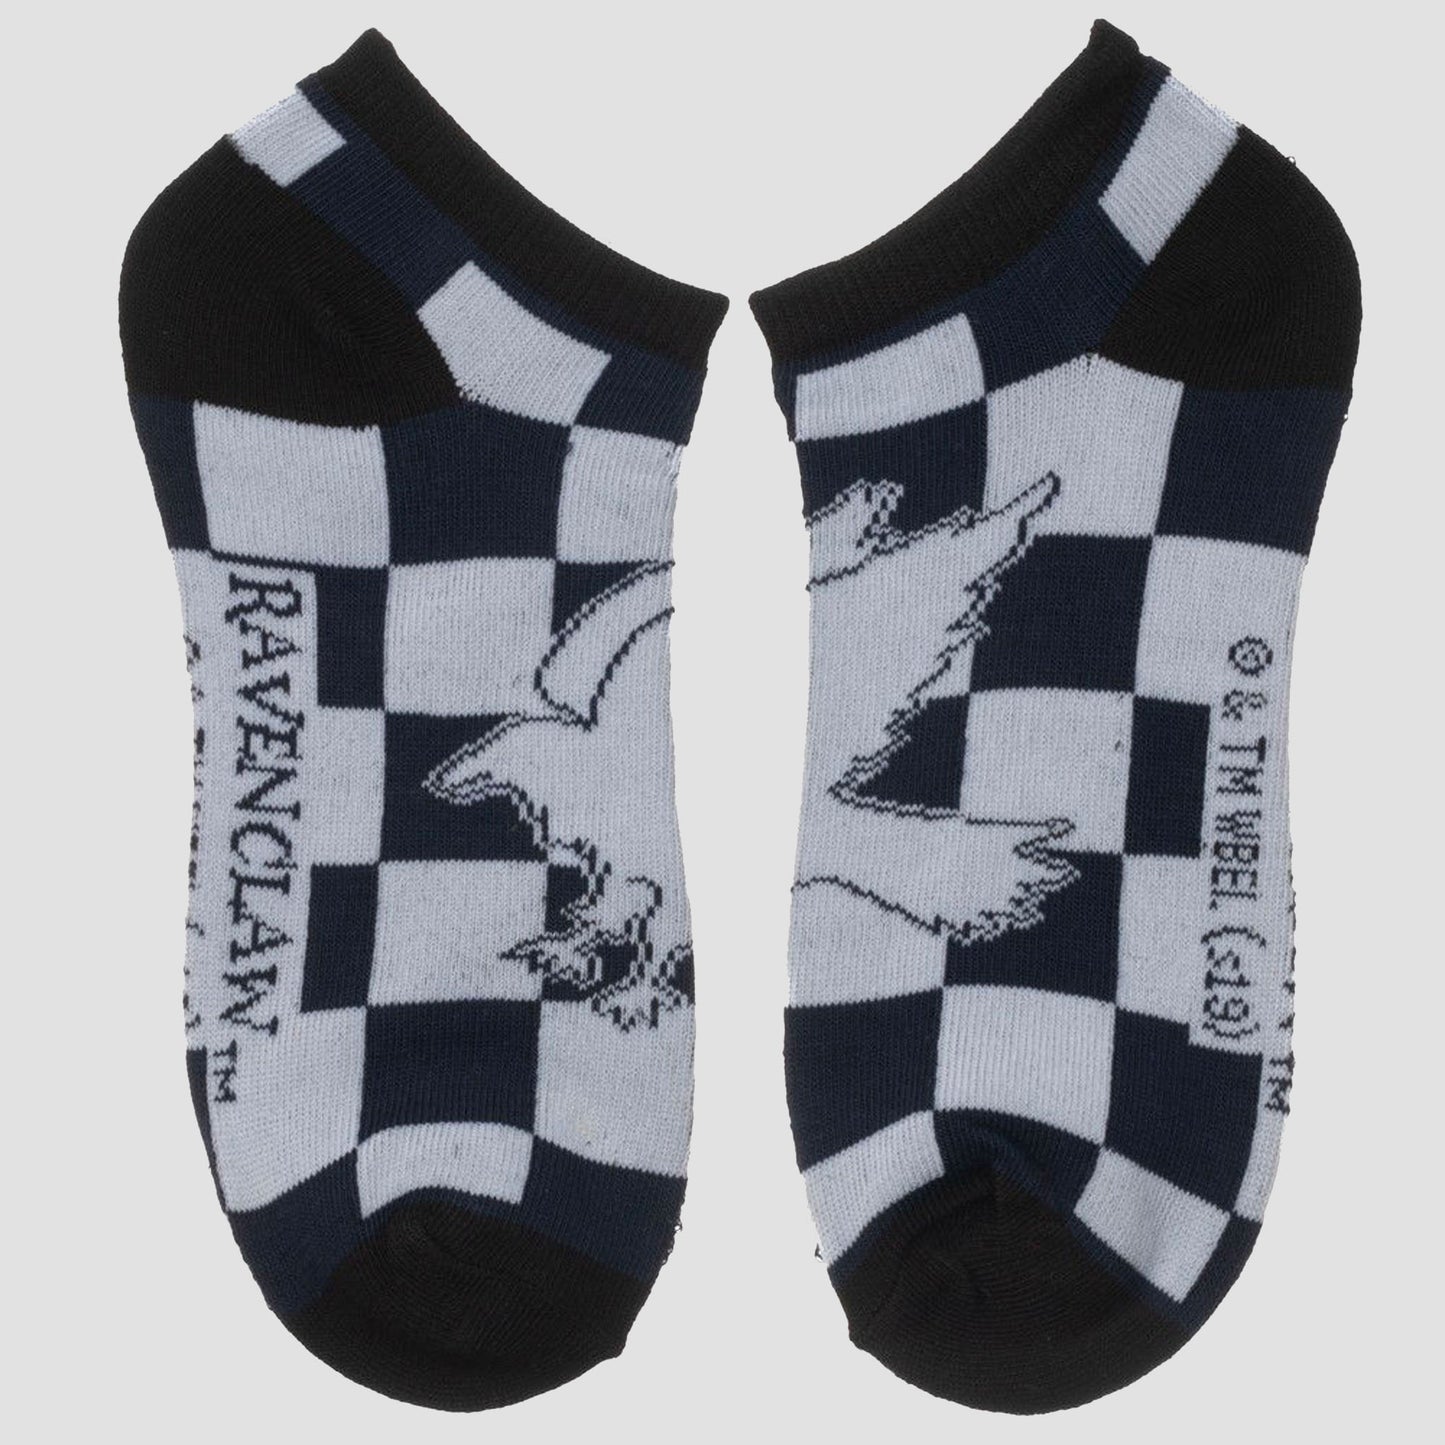 Ravenclaw House (Harry Potter) Ankle Socks 5 Pair Set